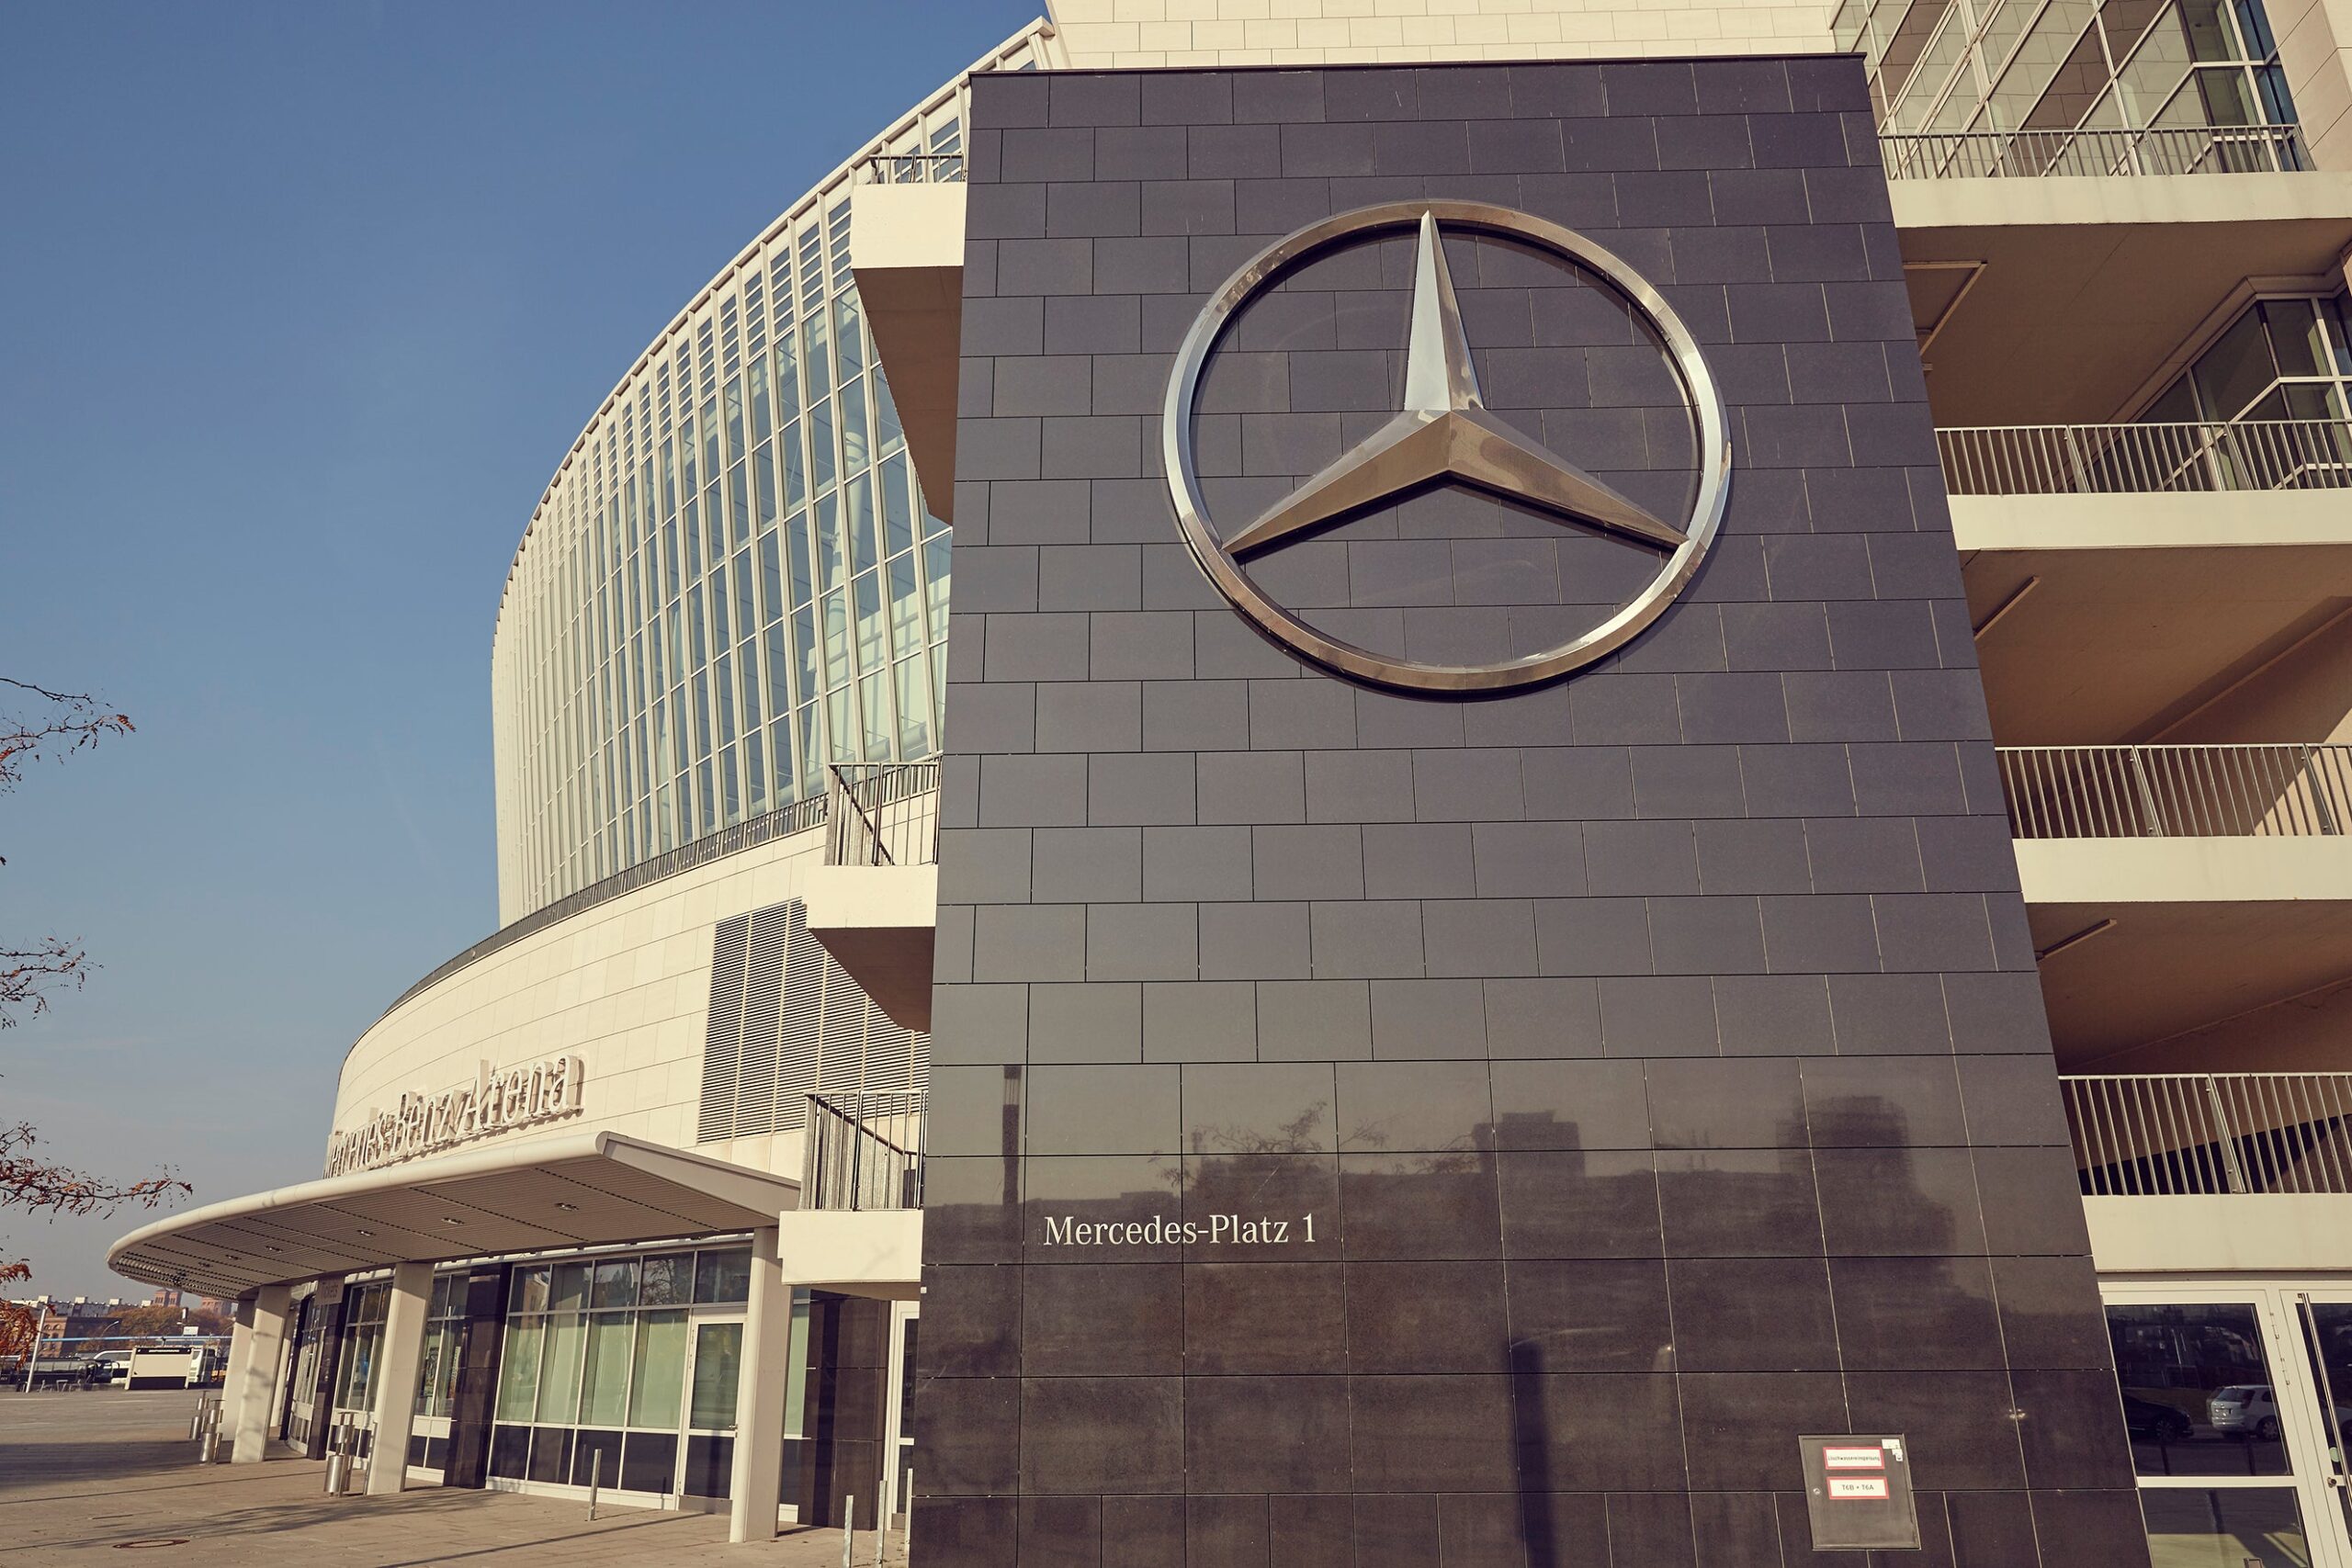 Mercedes-Benz Arena & Platz in Berlin wechseln Namen